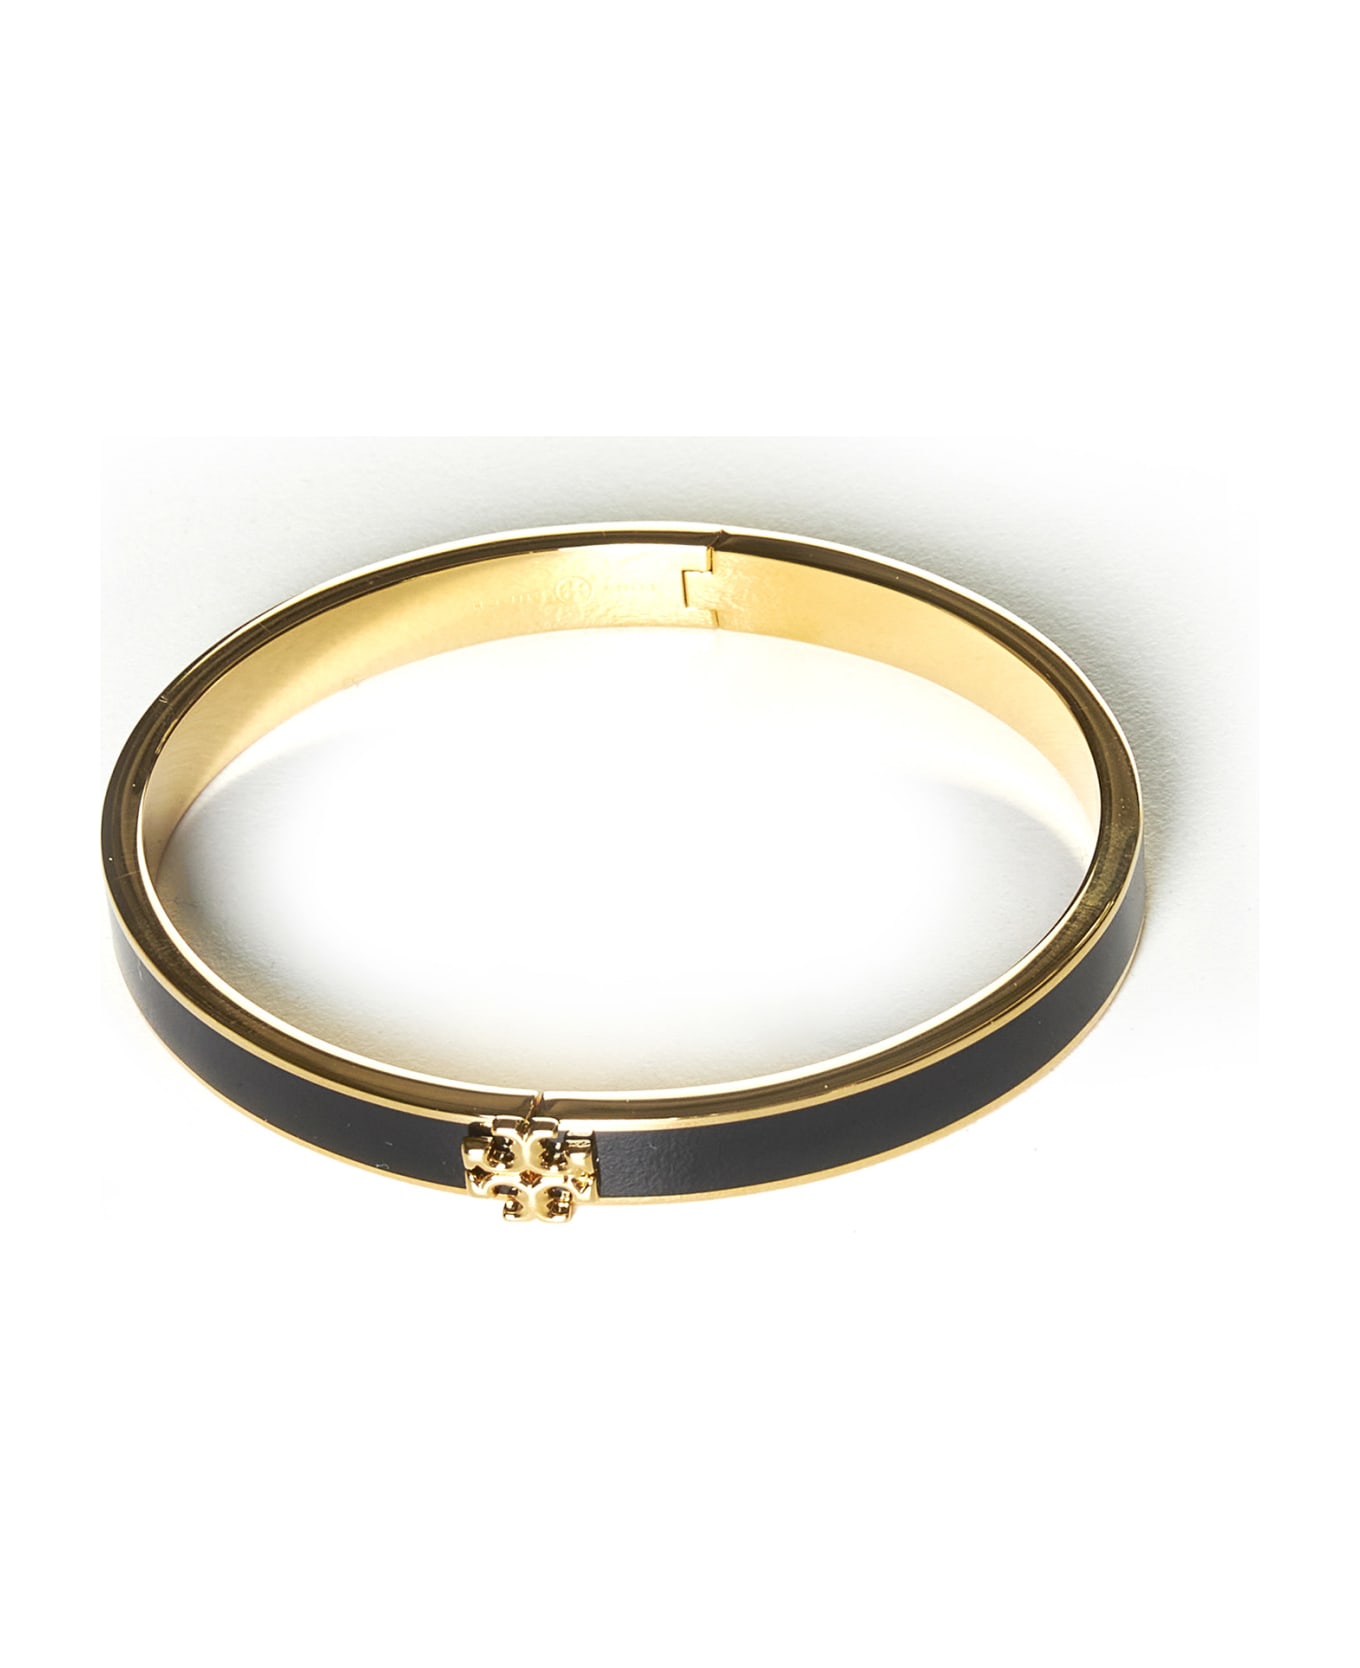 Tory Burch Gold And Black Brass Kira Bracelet - Tory gold / black